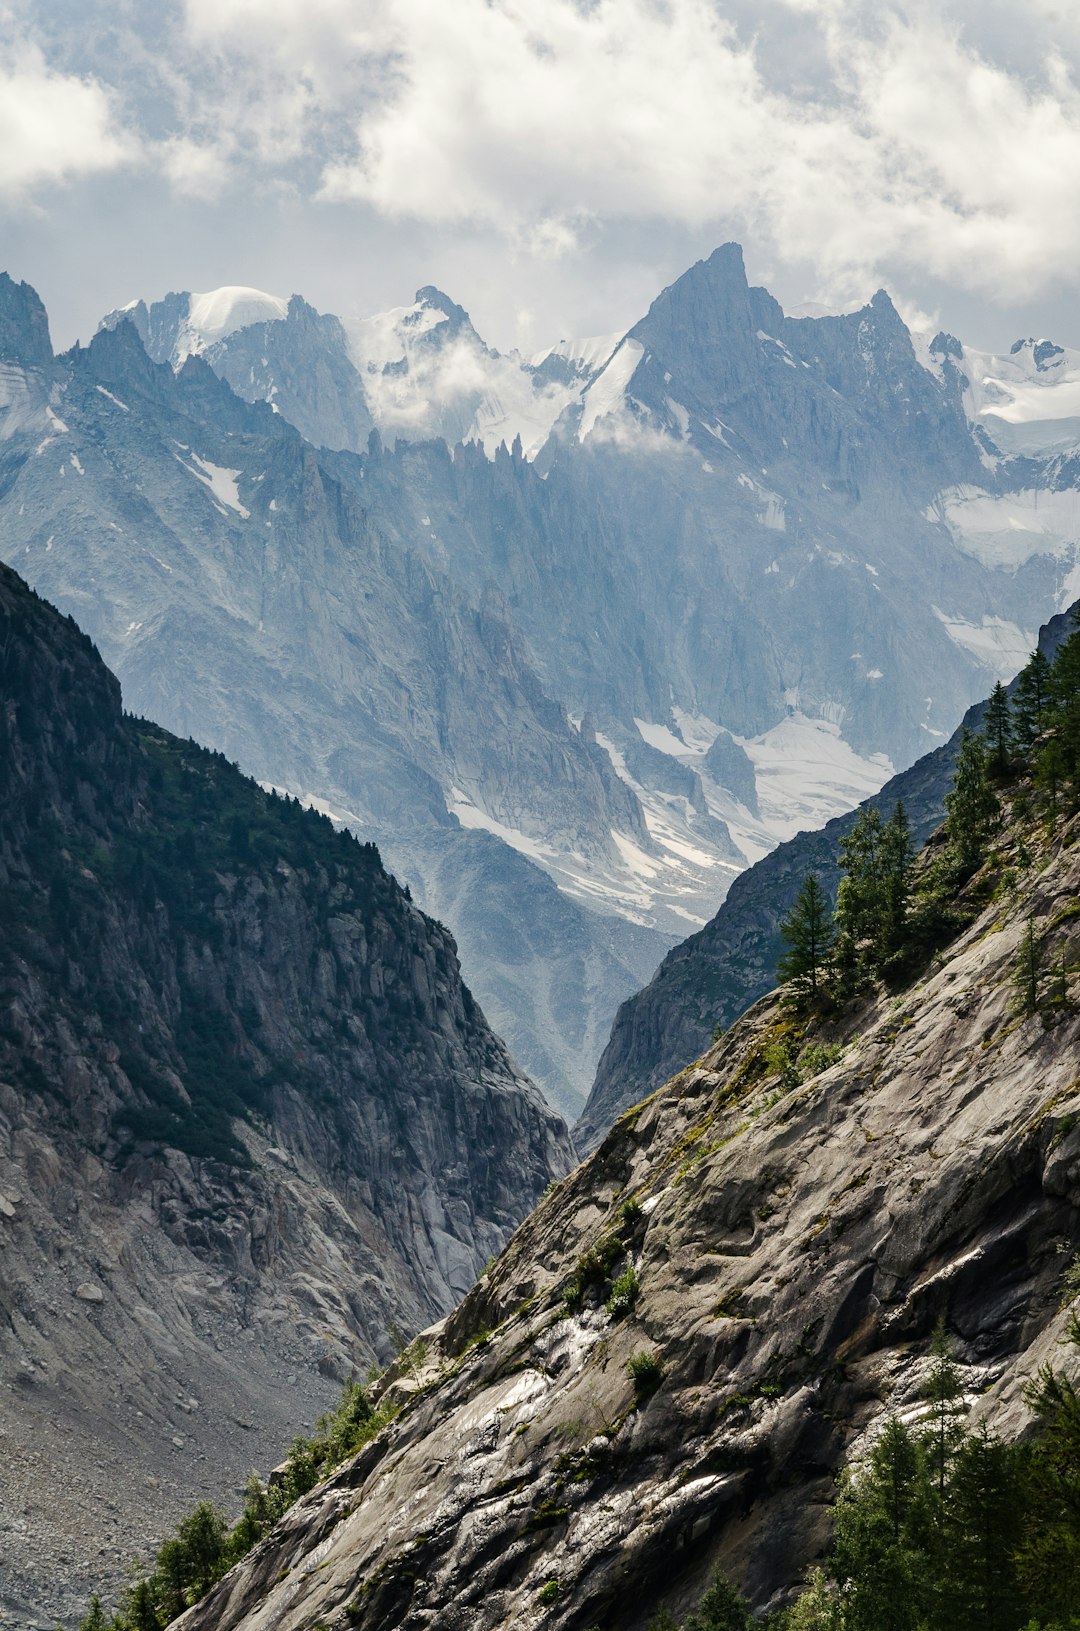 gray and white mountains during daytime photo – Free Grey Image on Unsplash